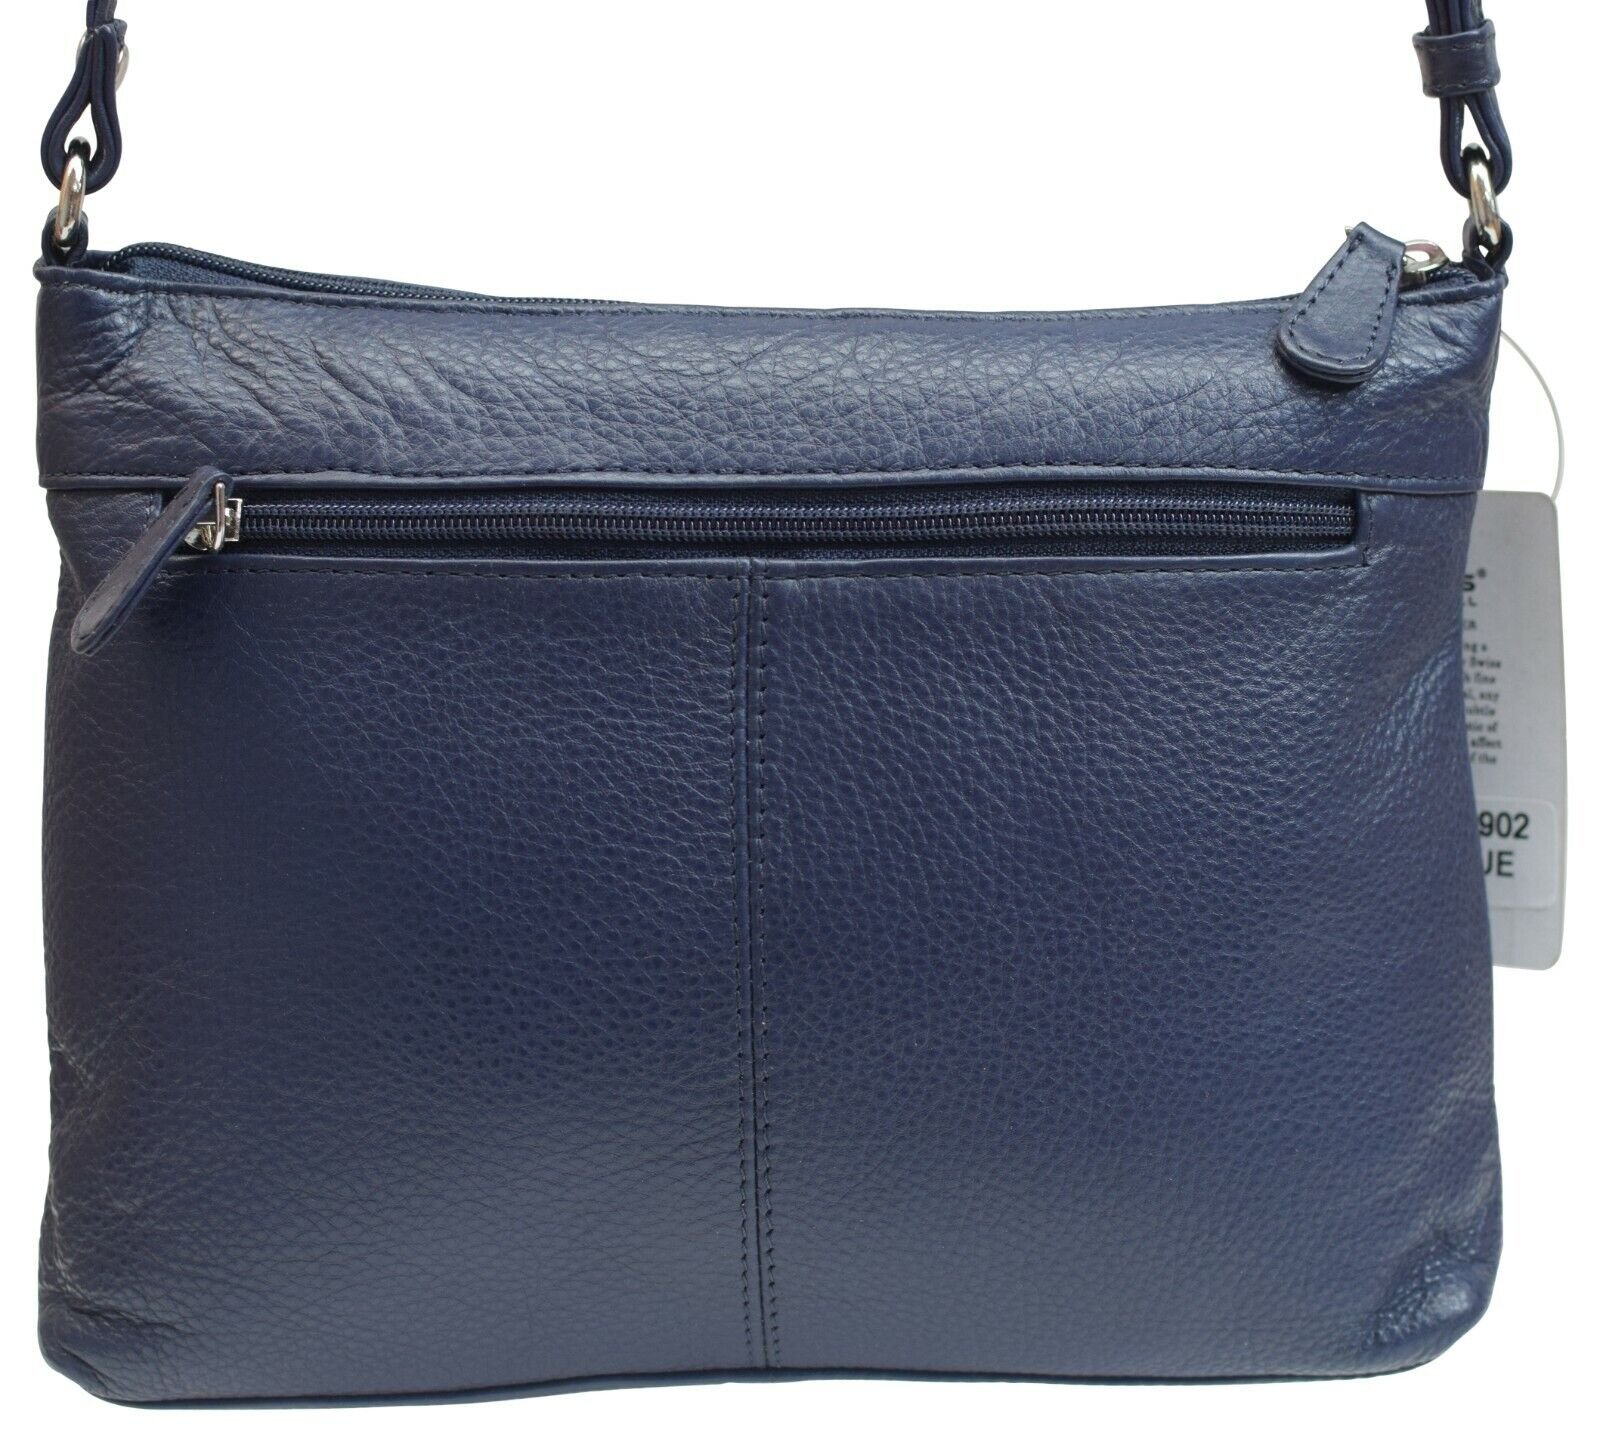 Designer Handbags for Women Canvas Fashion Shoulder Crossbody - Black /  40cm x 14cm x 28cm | Women bags fashion, Women handbags, Patent leather  handbags